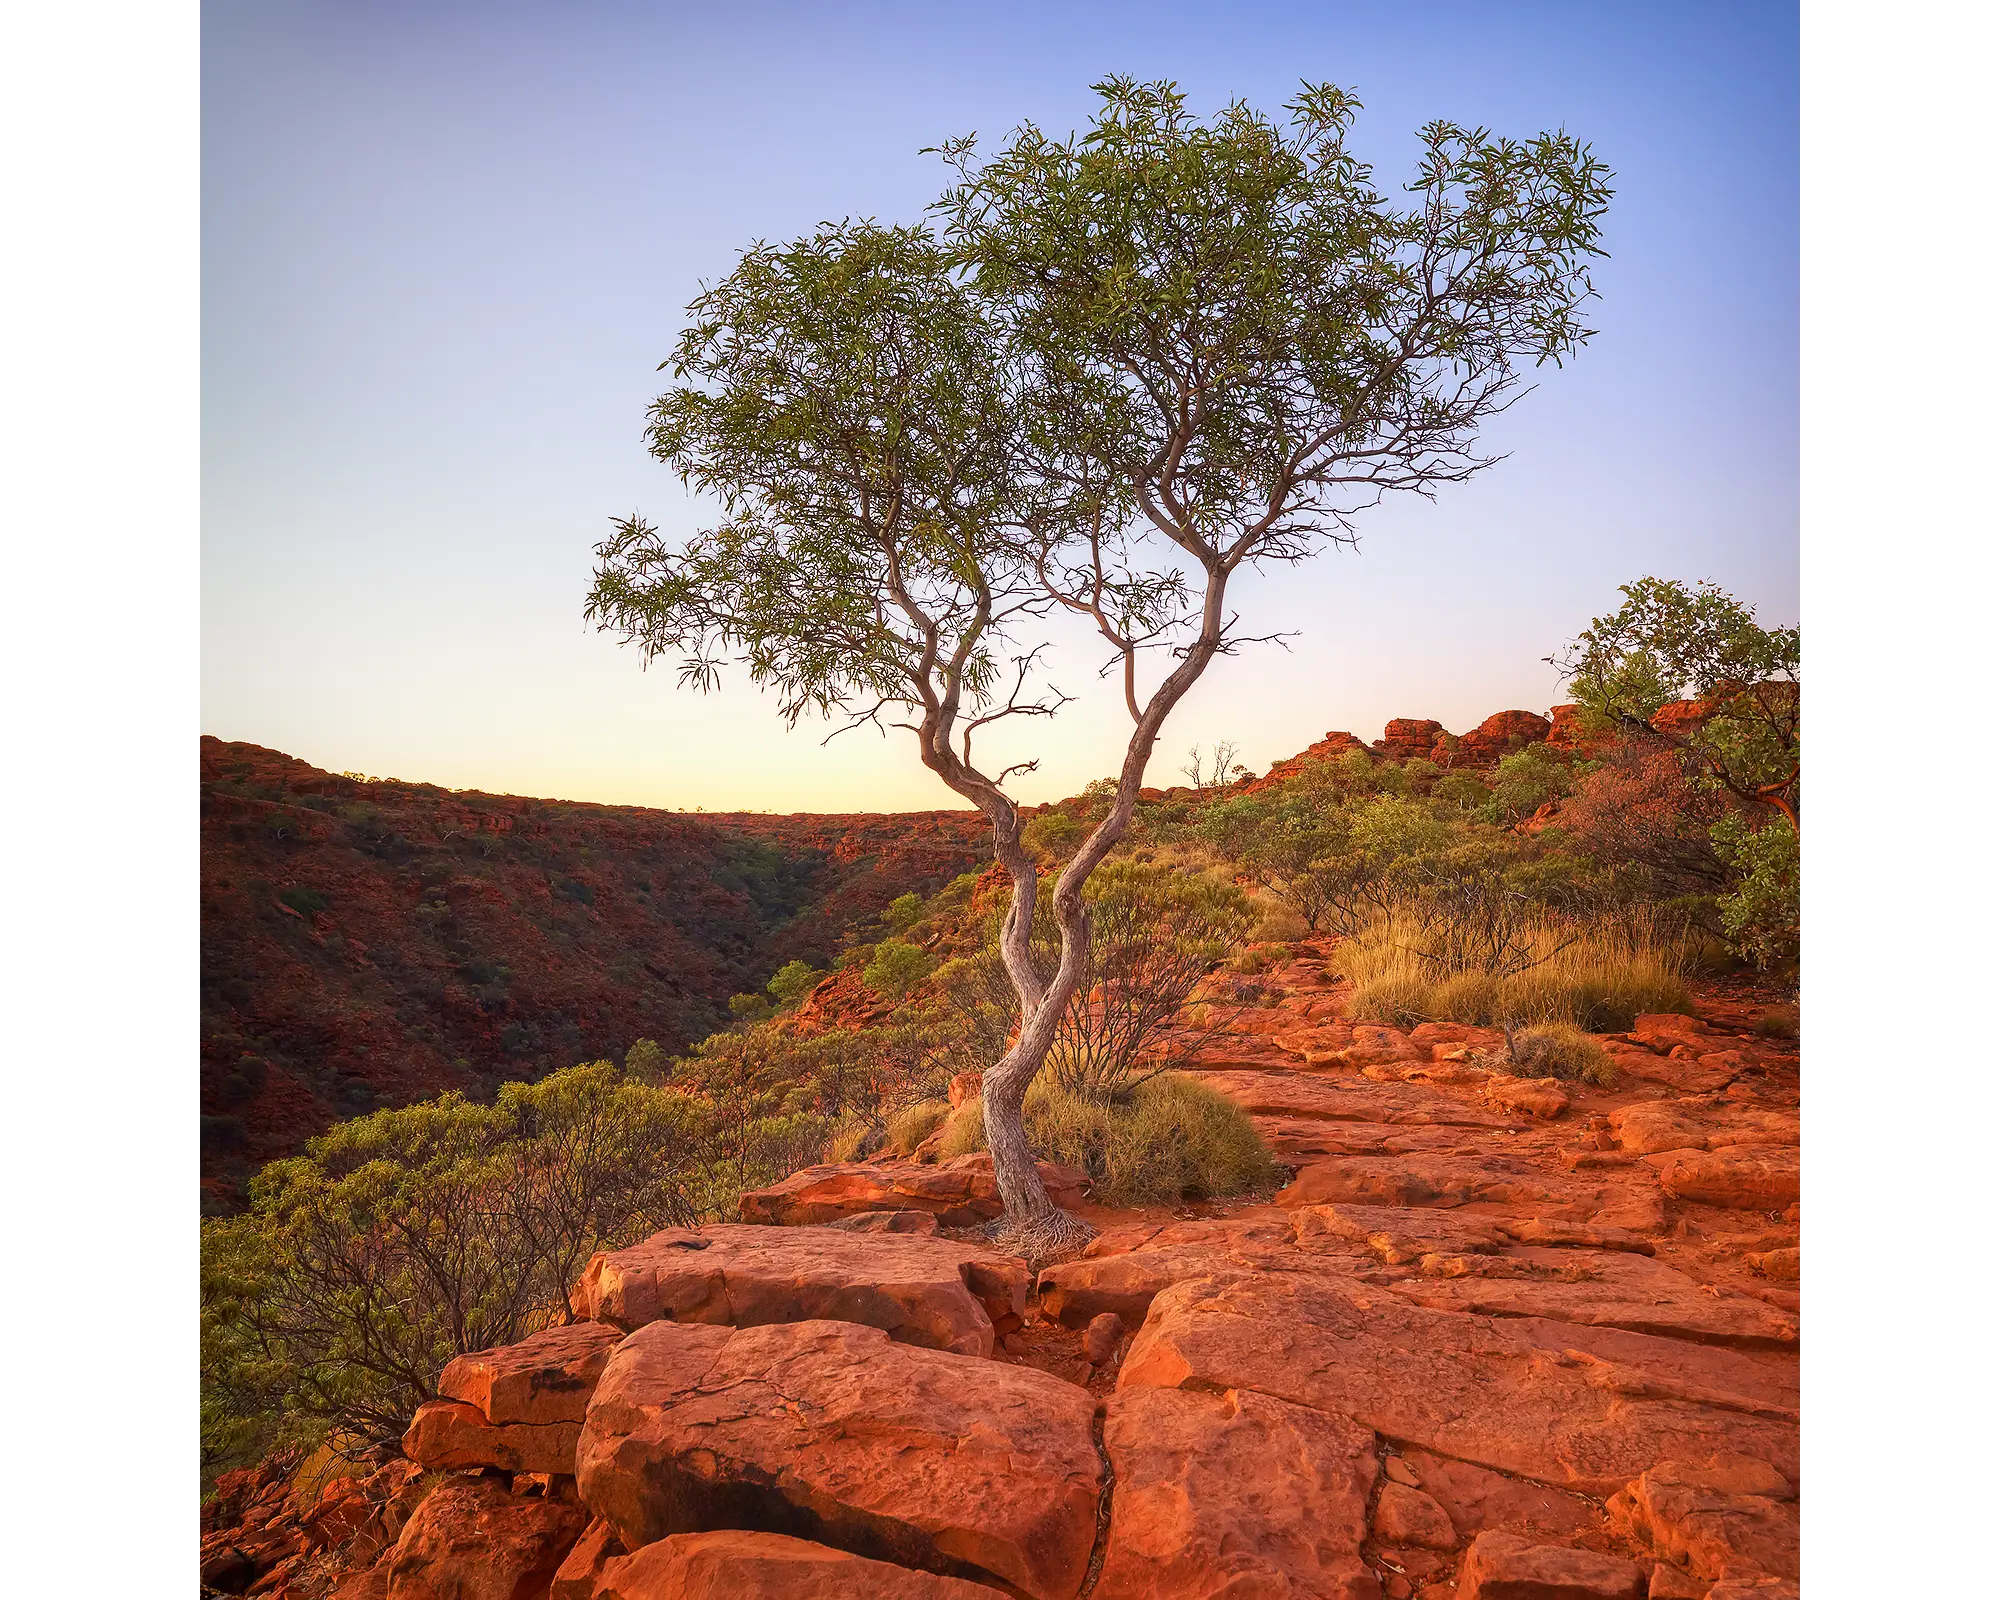 On The Edge. Tree growing in crack, Watarrka National Park, Northern Territory, Australia.